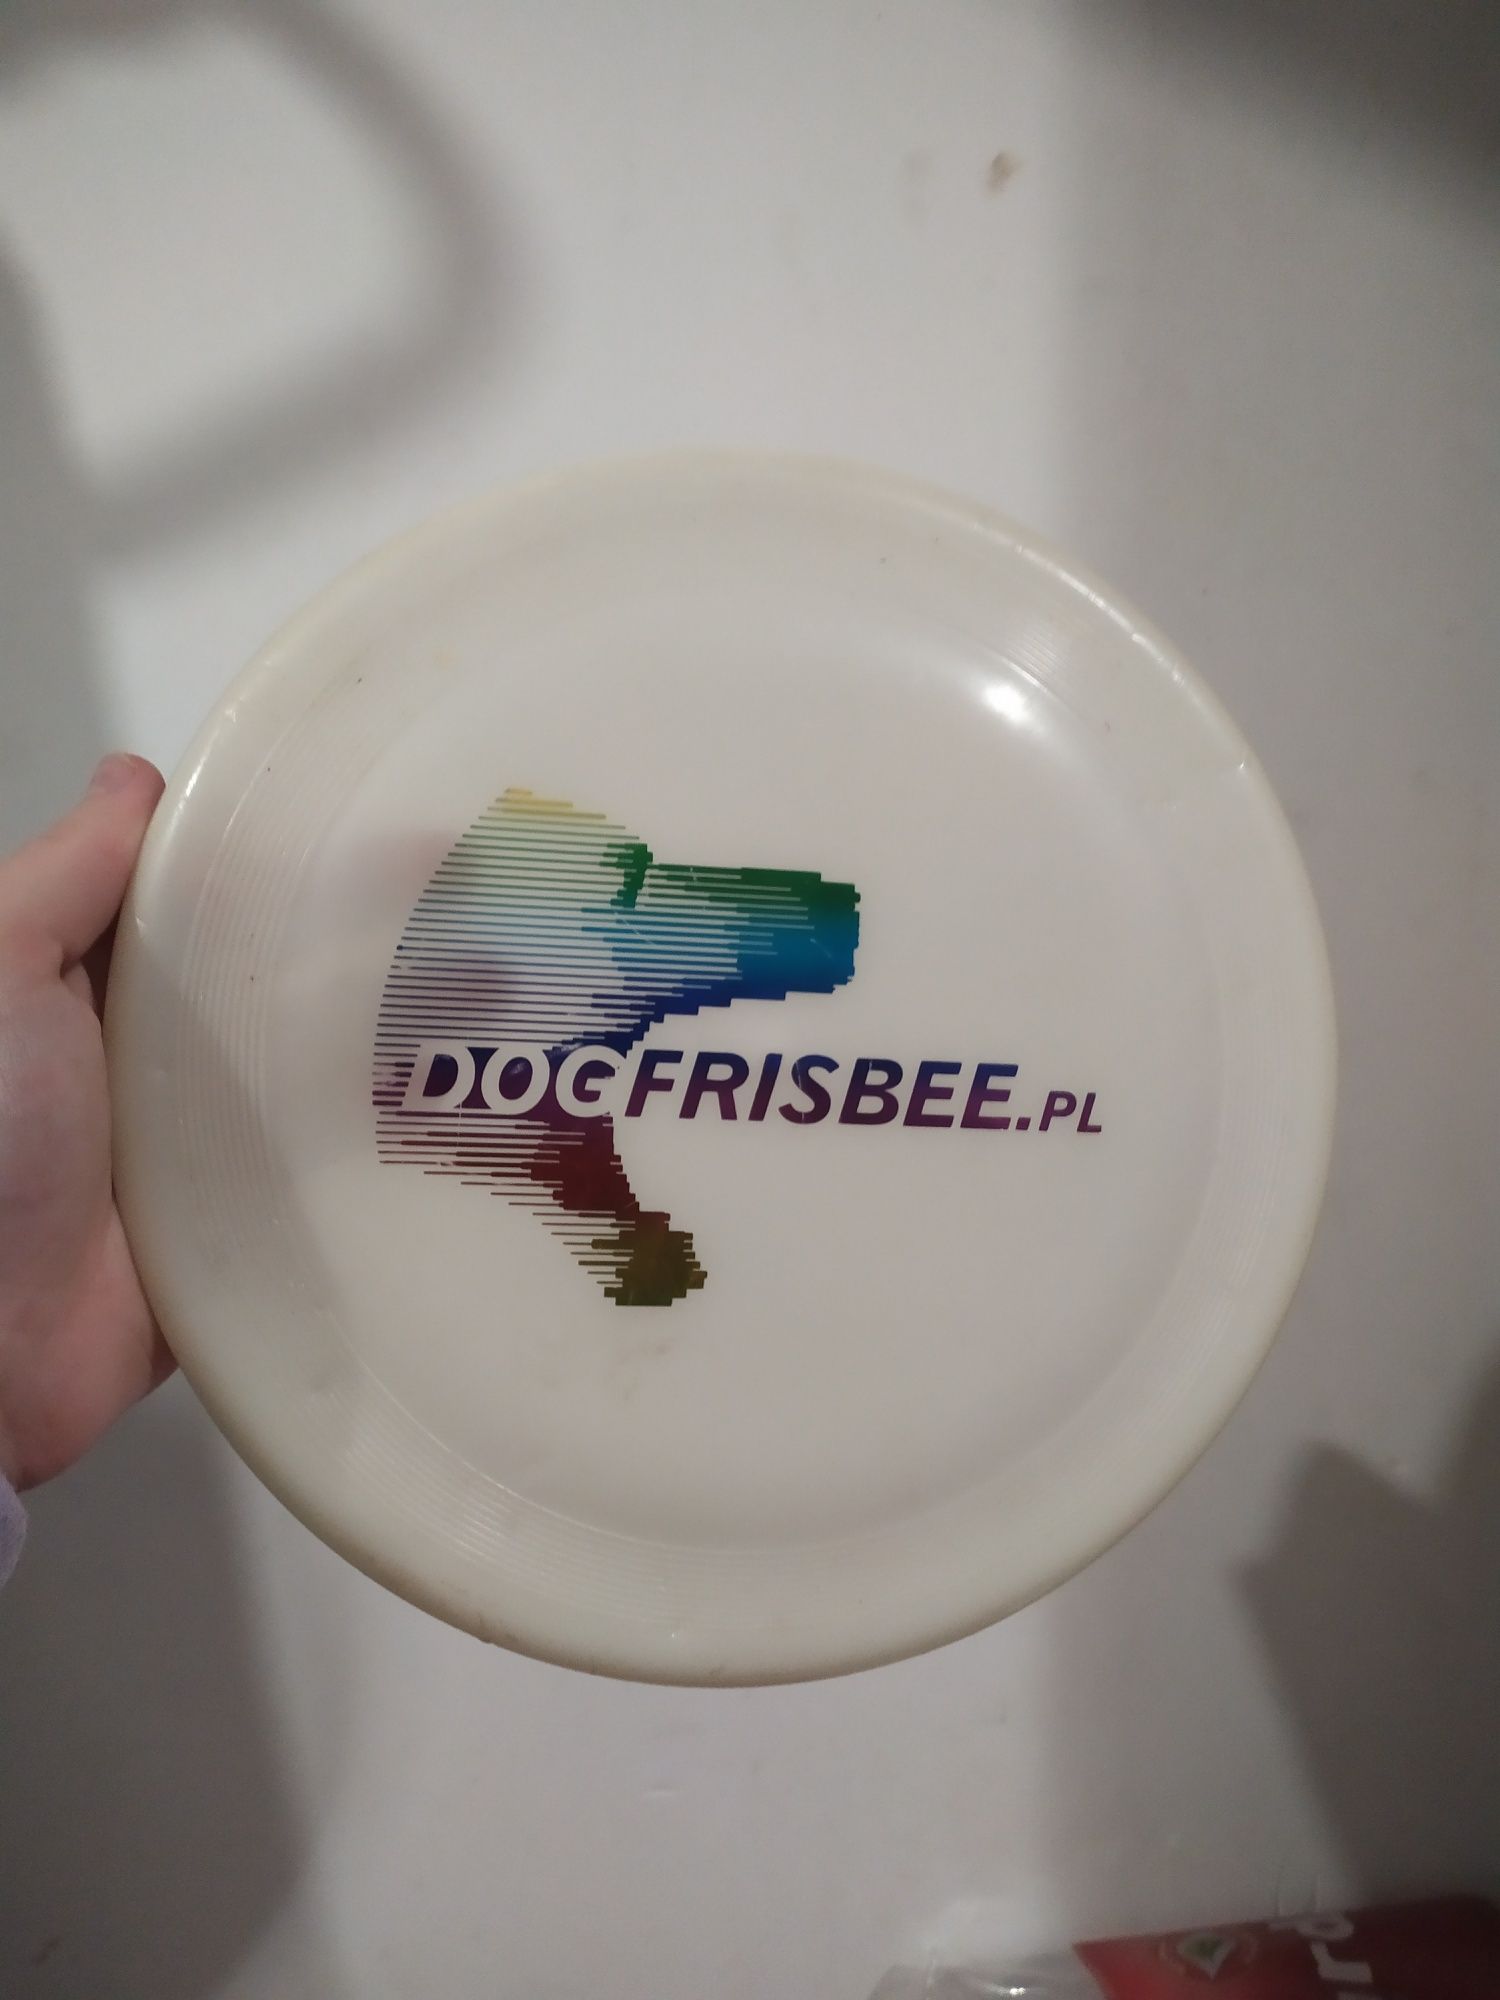 Frisbee dogfrisbee.pl dla psa